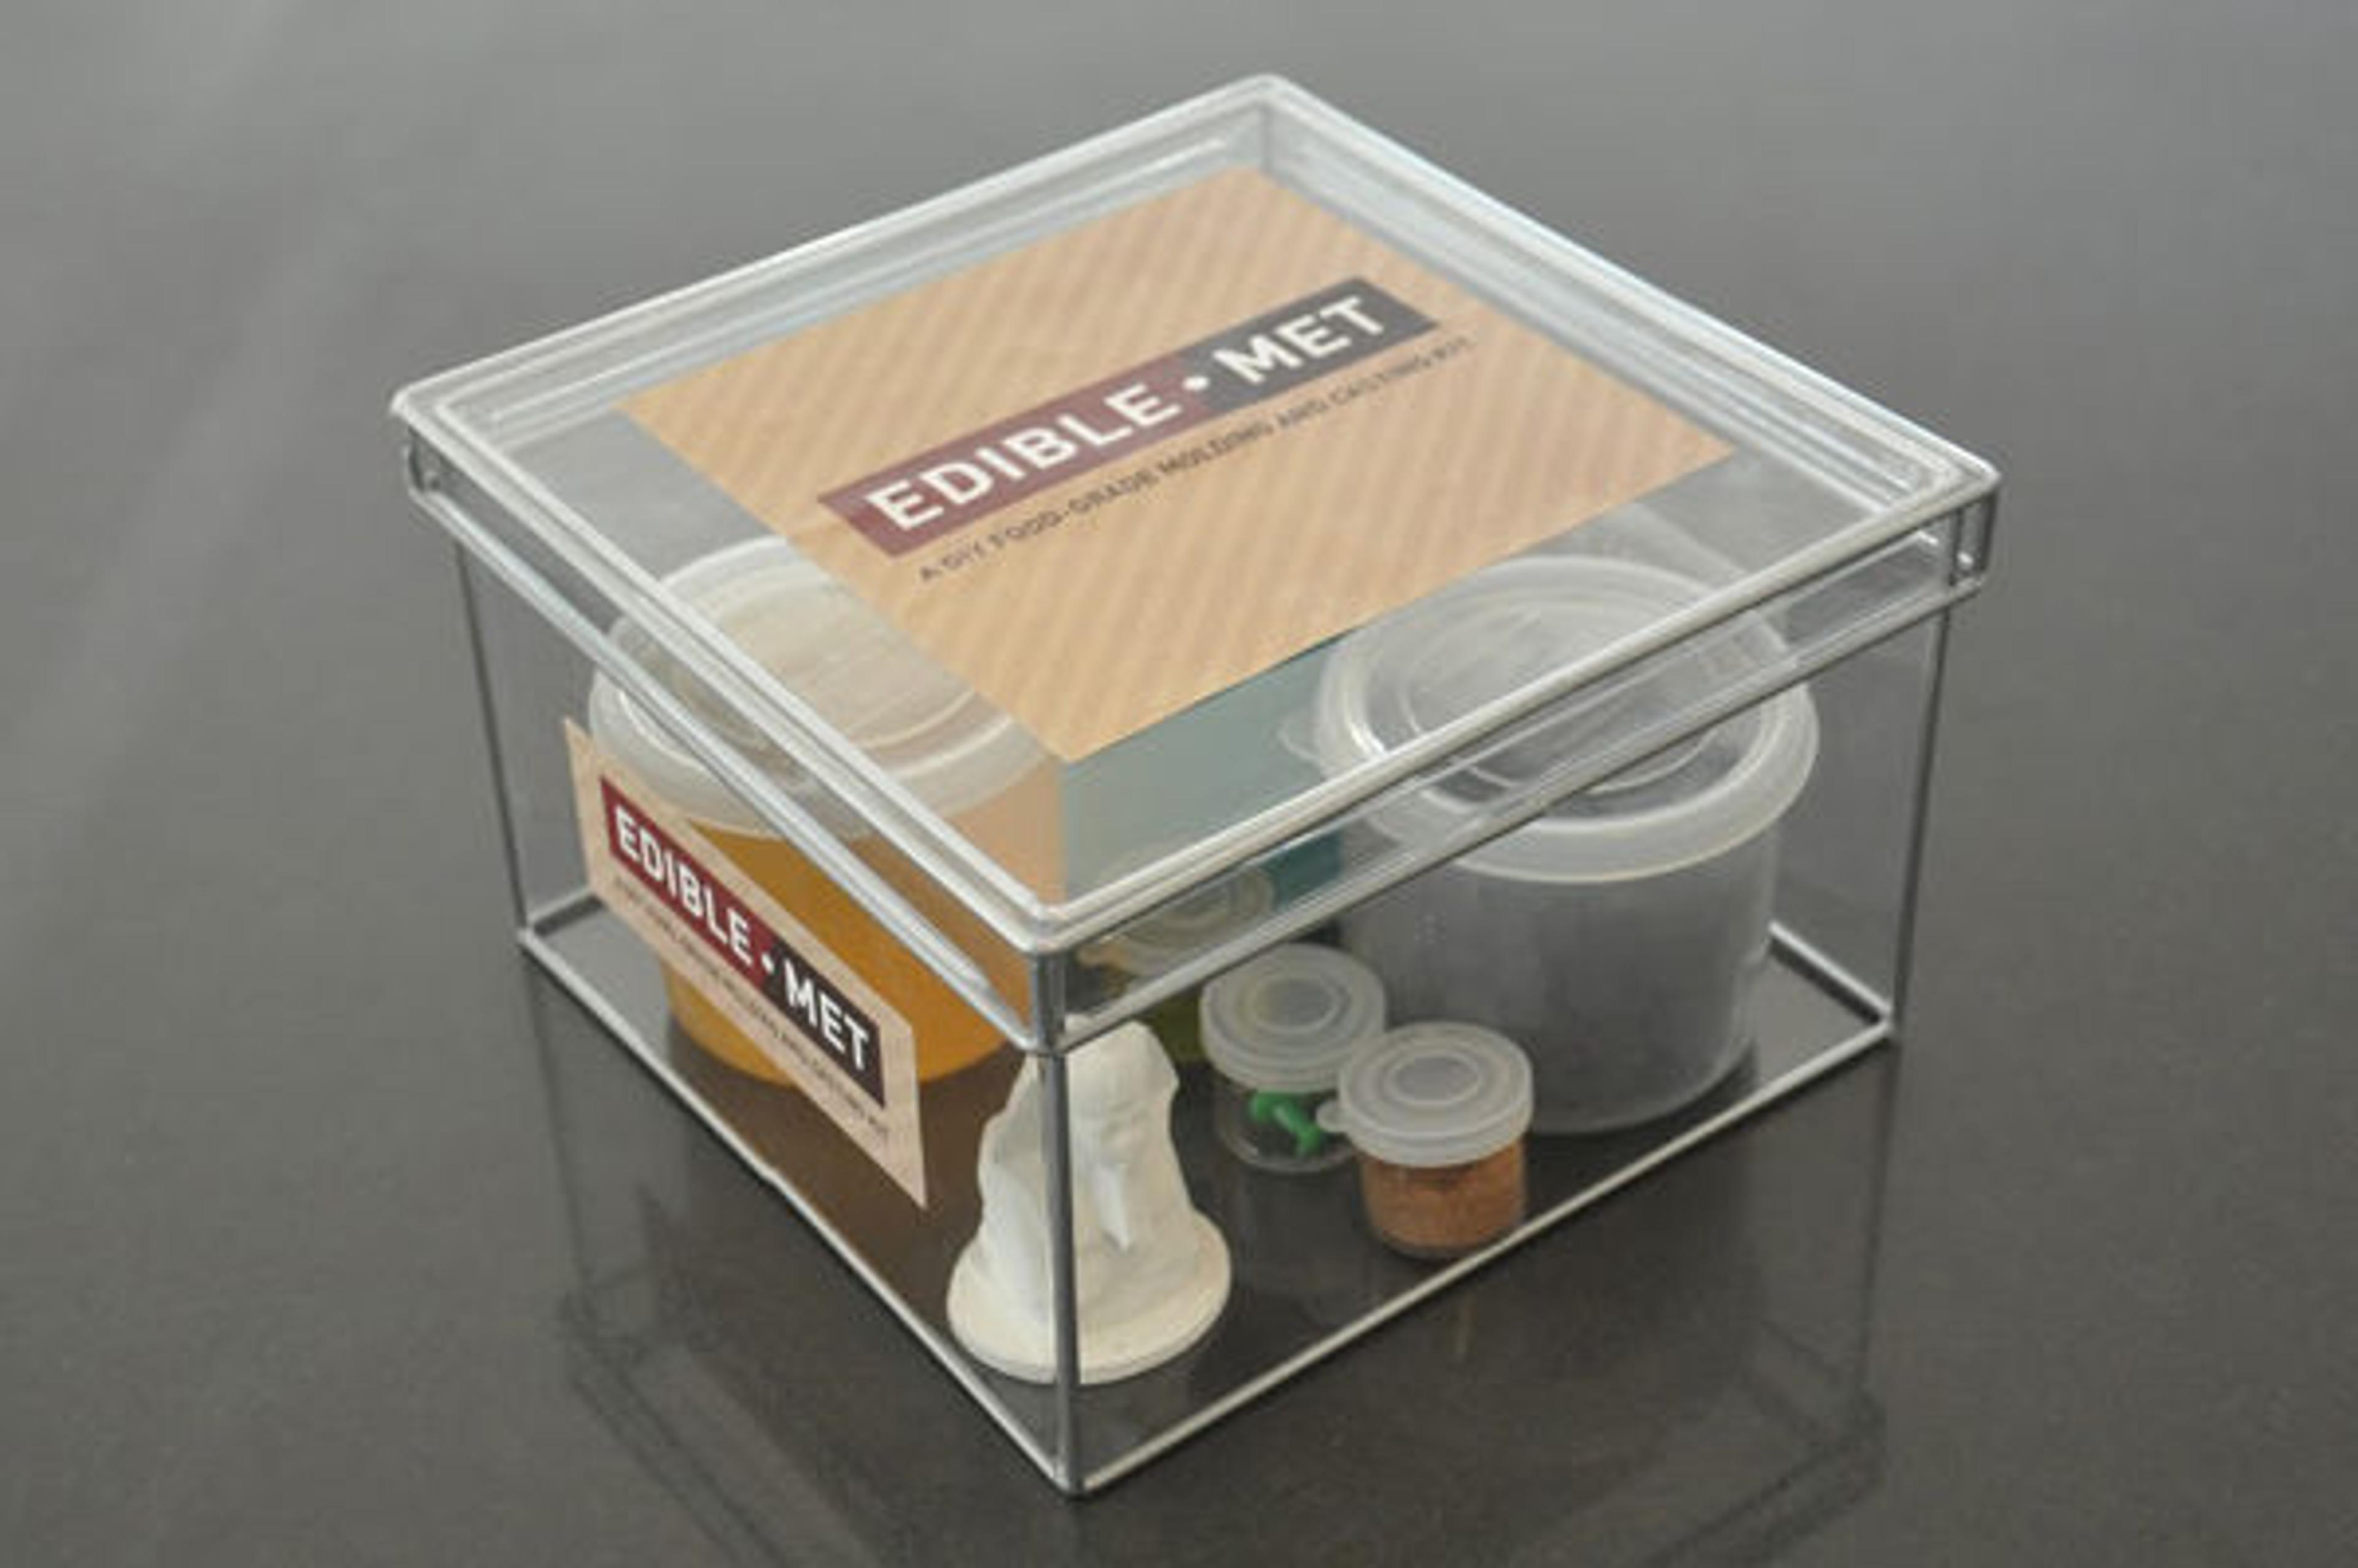 Edible MET kit inside case.